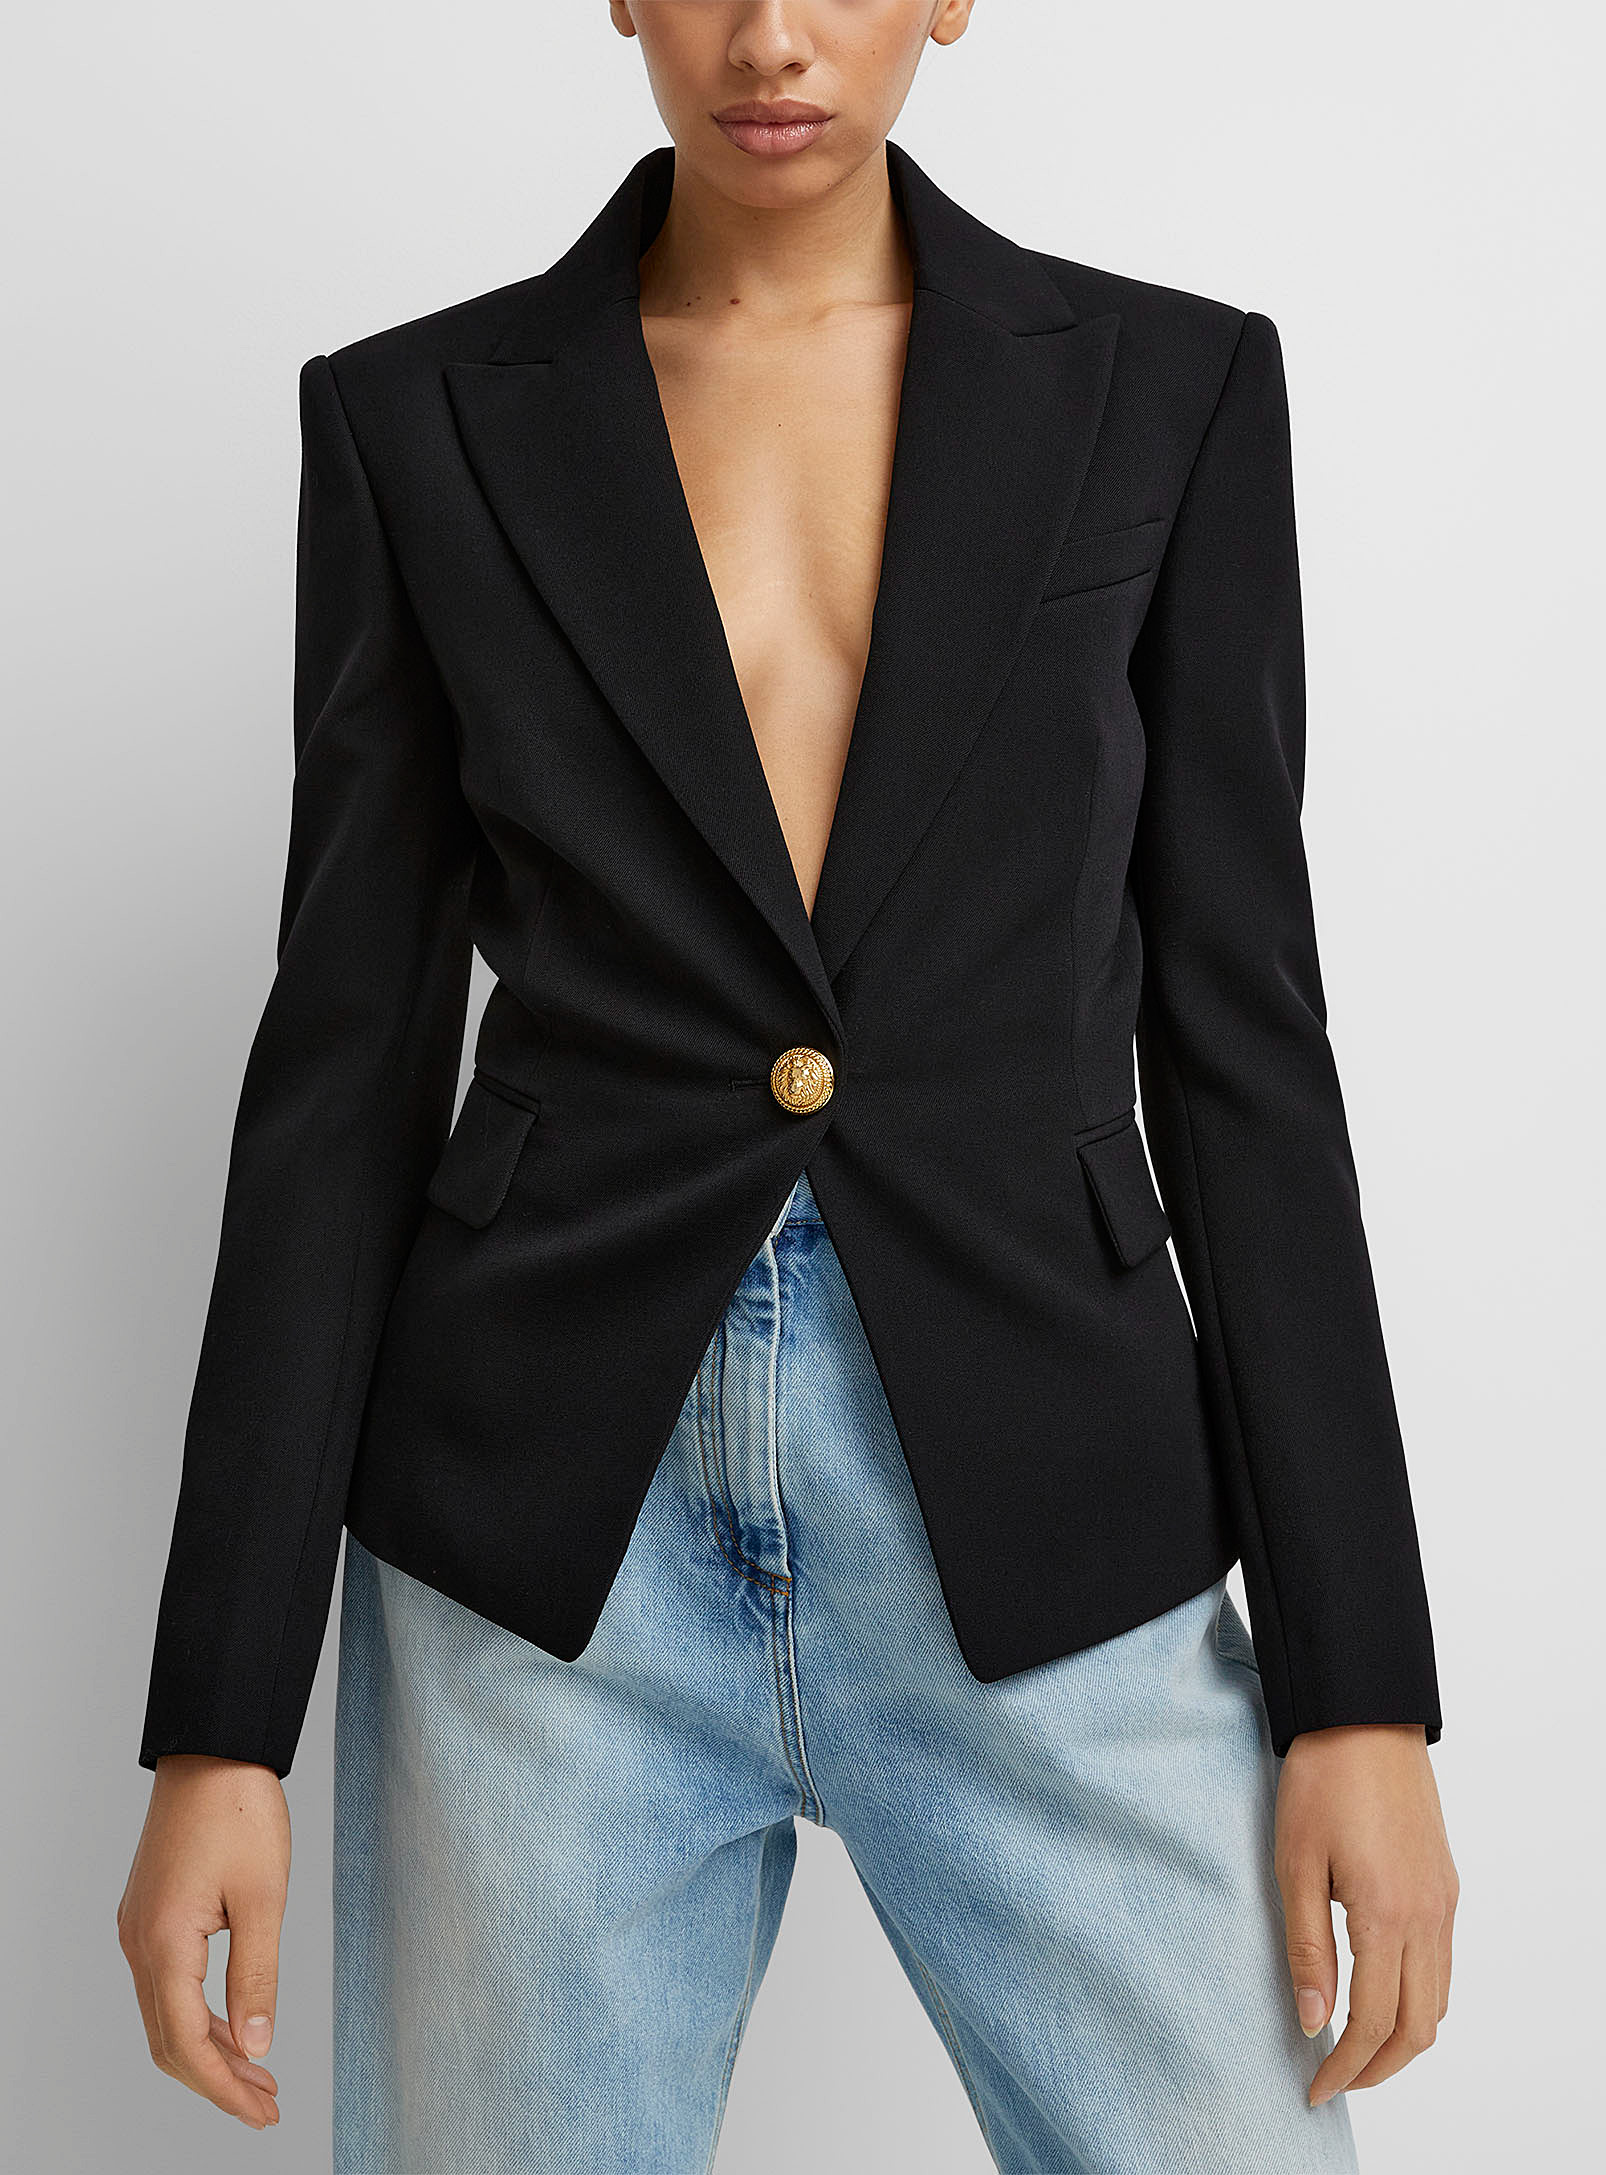 Balmain - Women's Single-button fitted Blazer Jacket